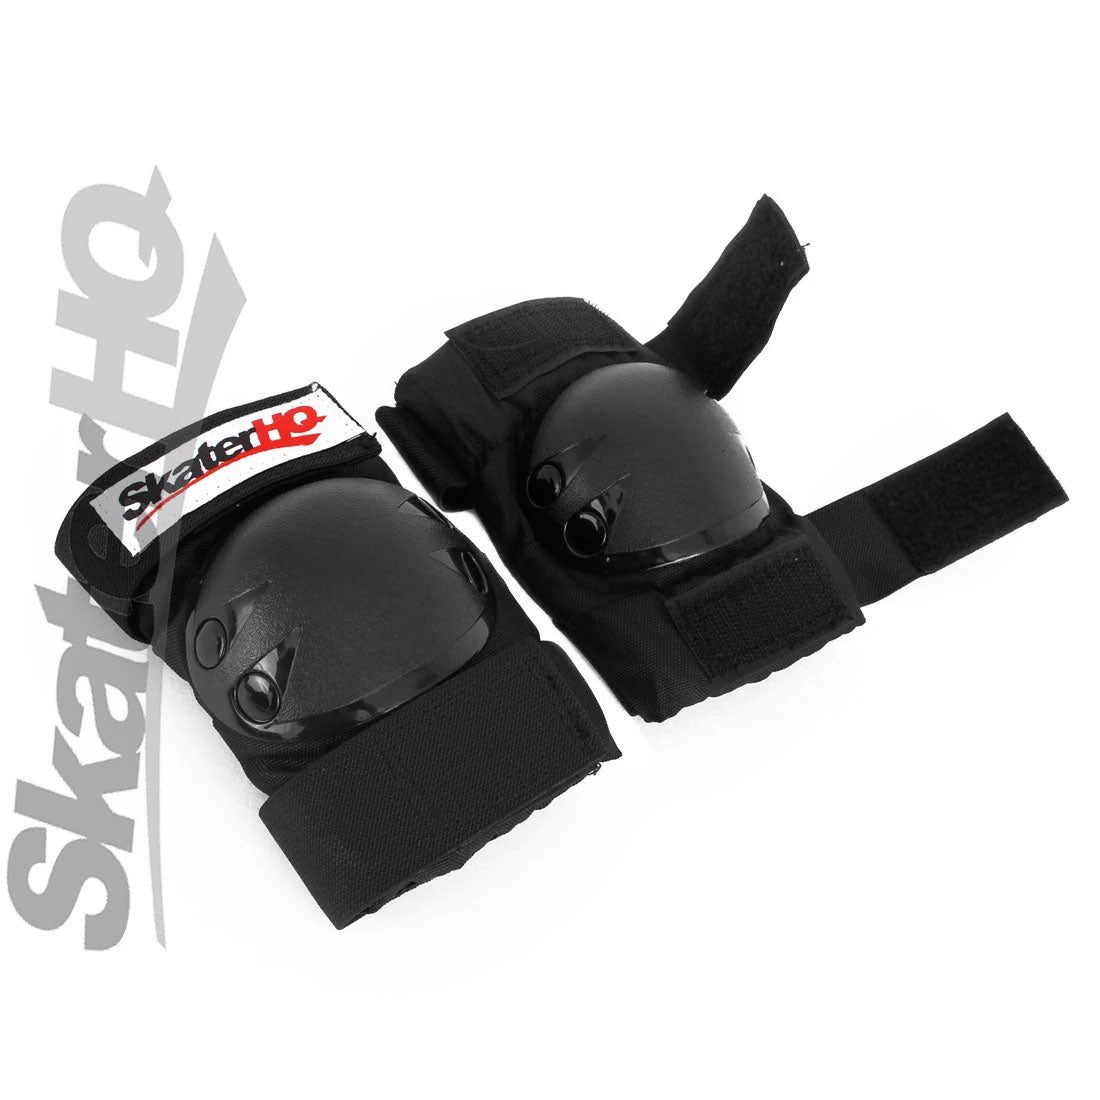 Skater HQ Knee/Elbow Set - Junior Protective Gear